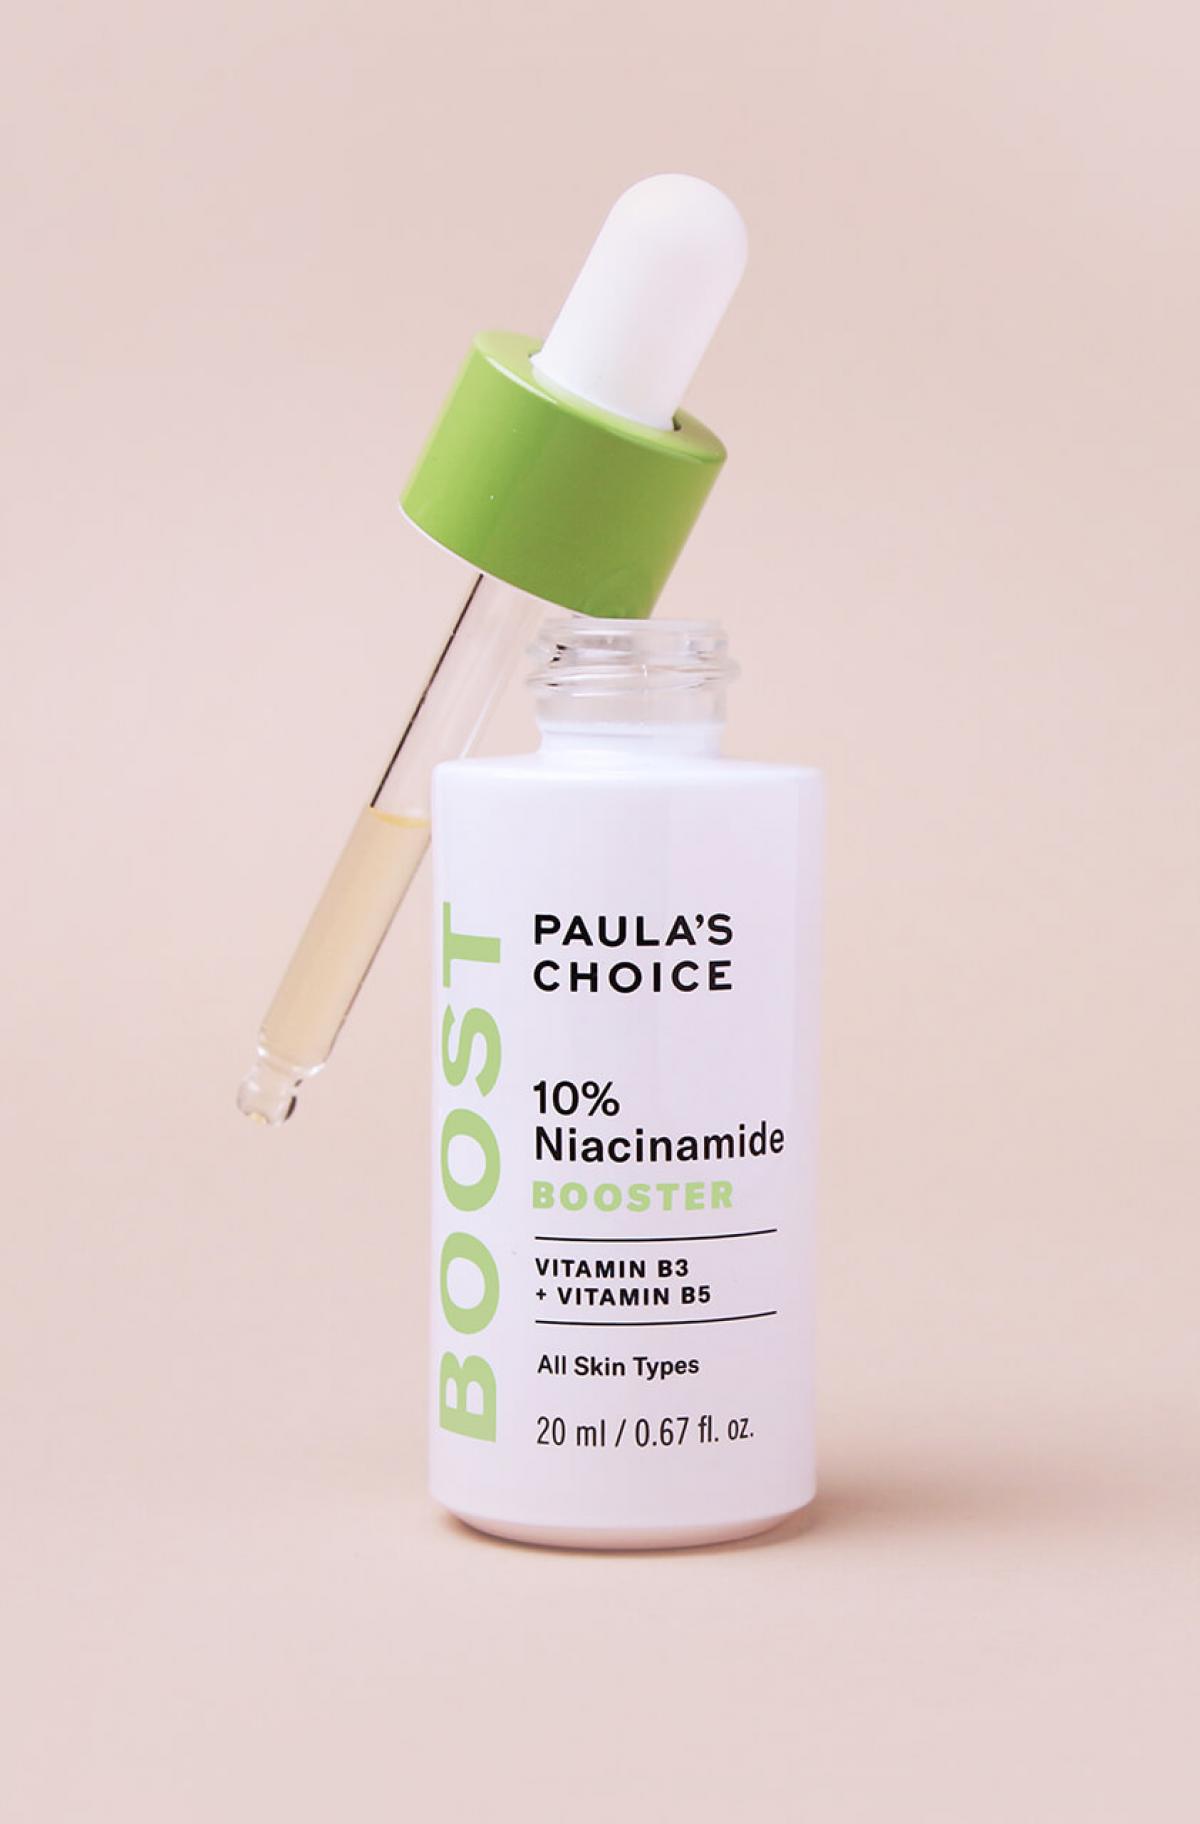 Paula's Choice: 10% niacinamide booster serum